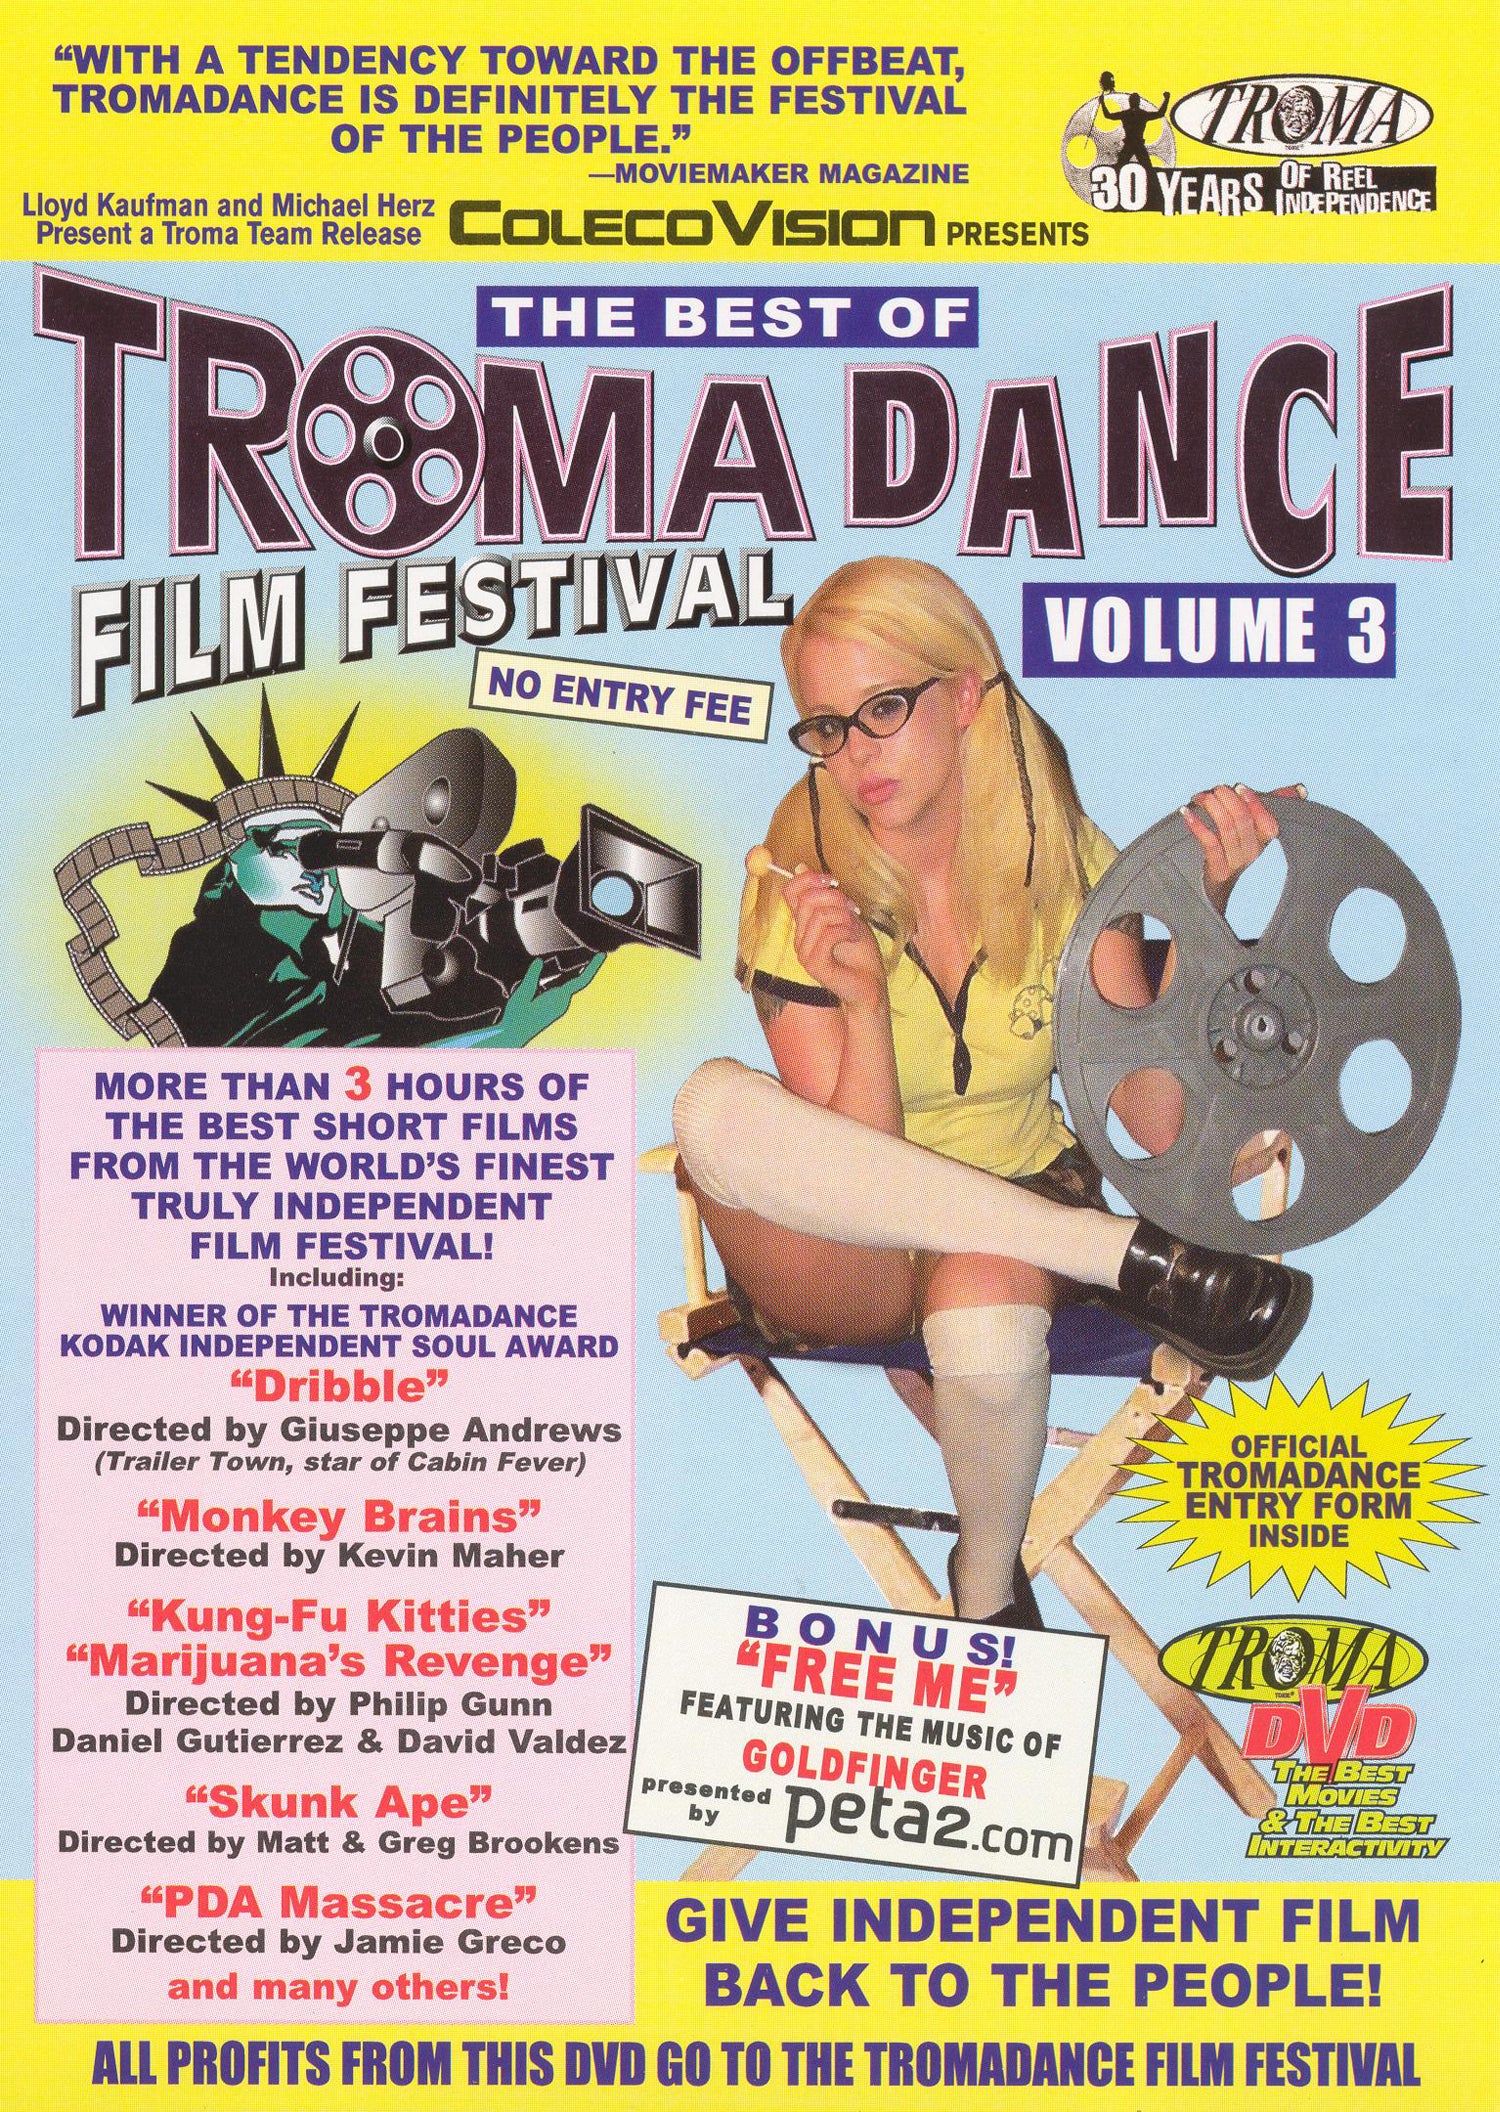 THE BEST OF TROMADANCE FILM FESTIVAL VOLUME 3 DVD